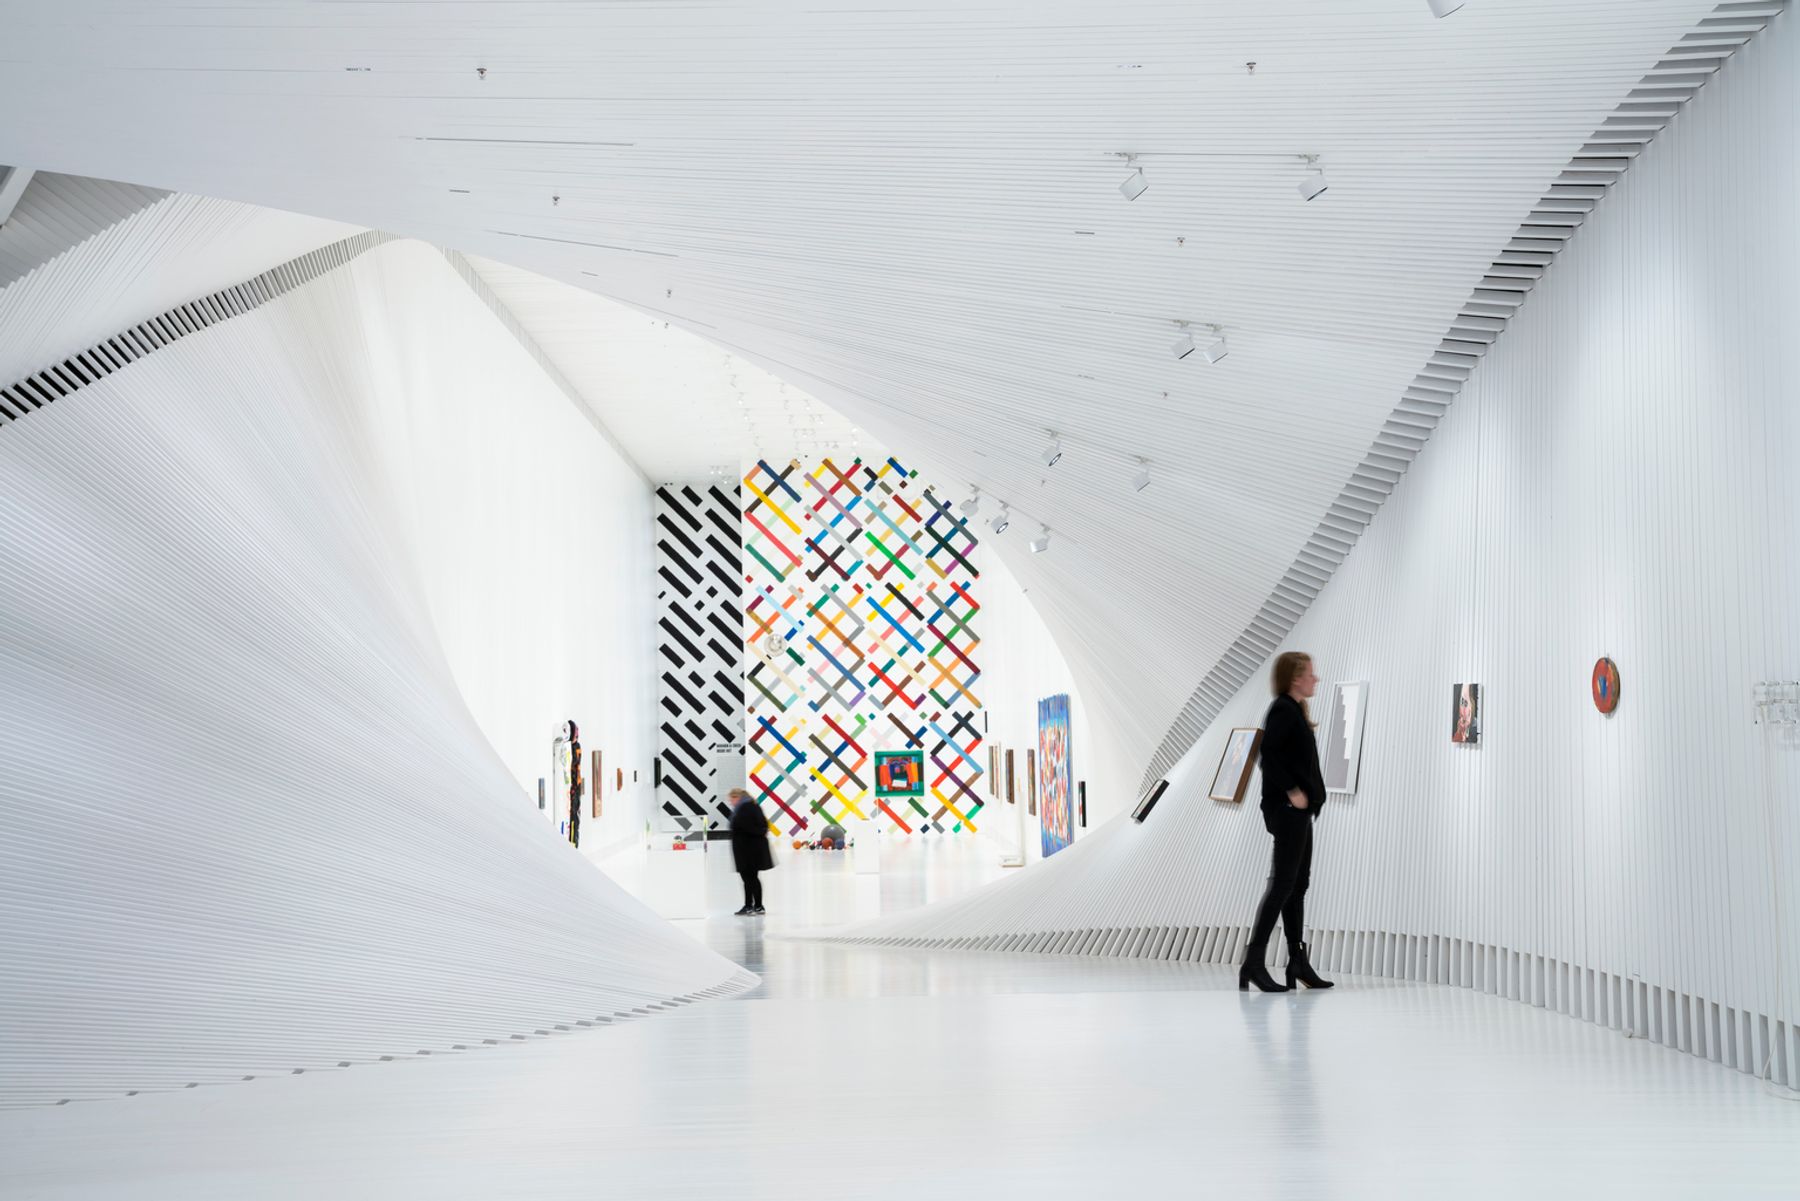 The Twist de Kistefos, Jevnaker. Arquitectura: BIG Bjarke Ingels Group, Copenhague. Diseño de iluminación: Light Bureau, Oslo. Fotografía: Tomasz Majewski, Oslo.